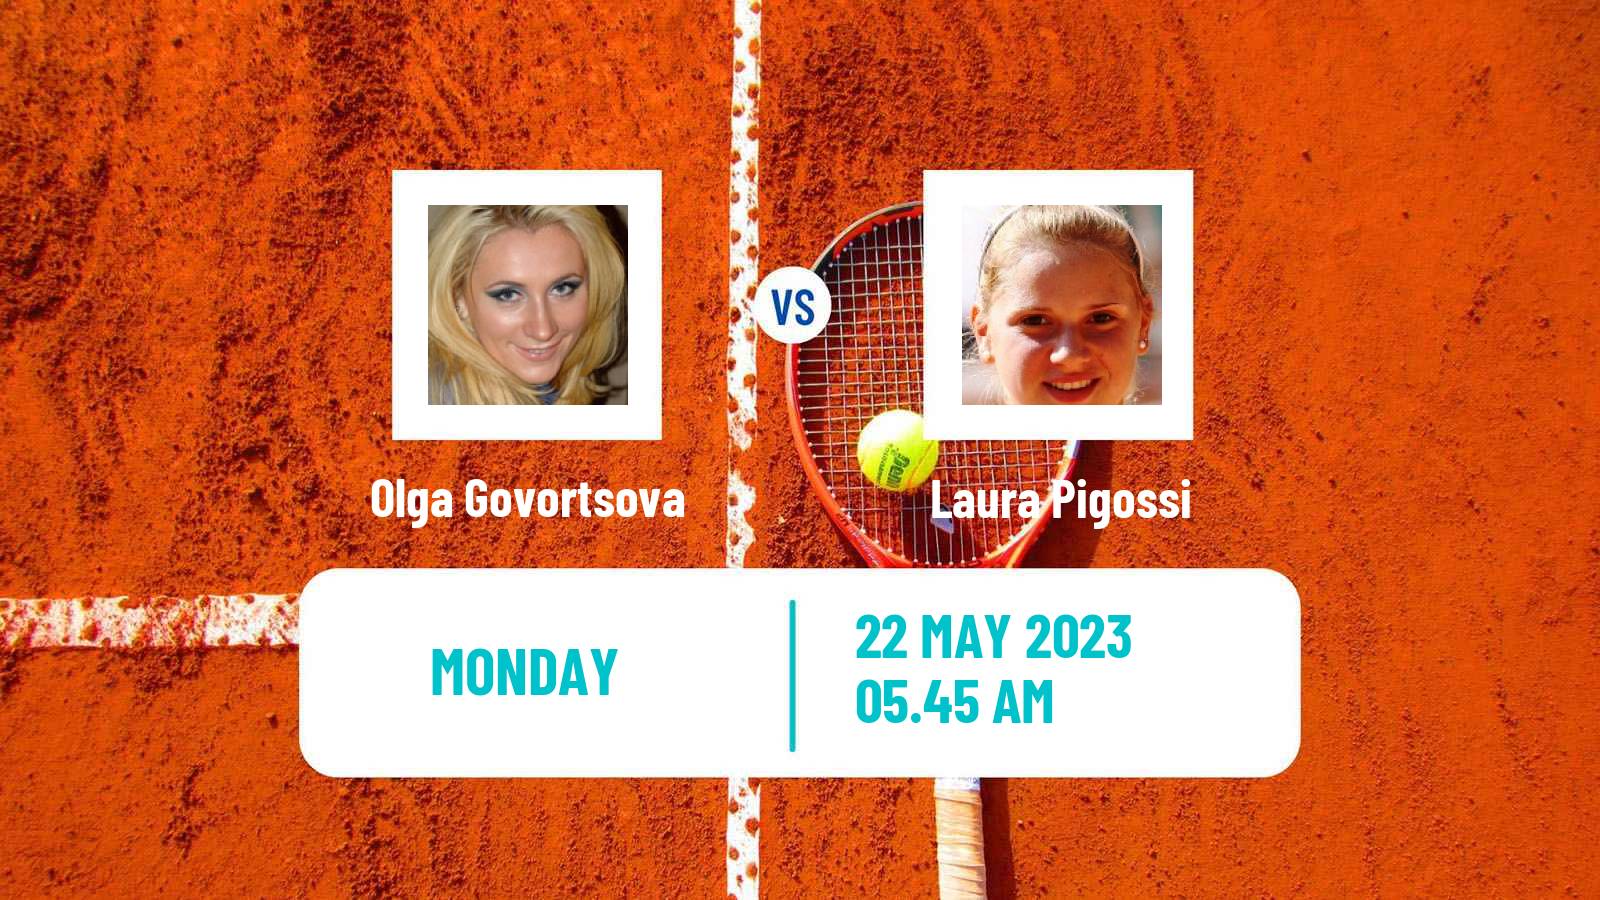 Tennis WTA Roland Garros Olga Govortsova - Laura Pigossi